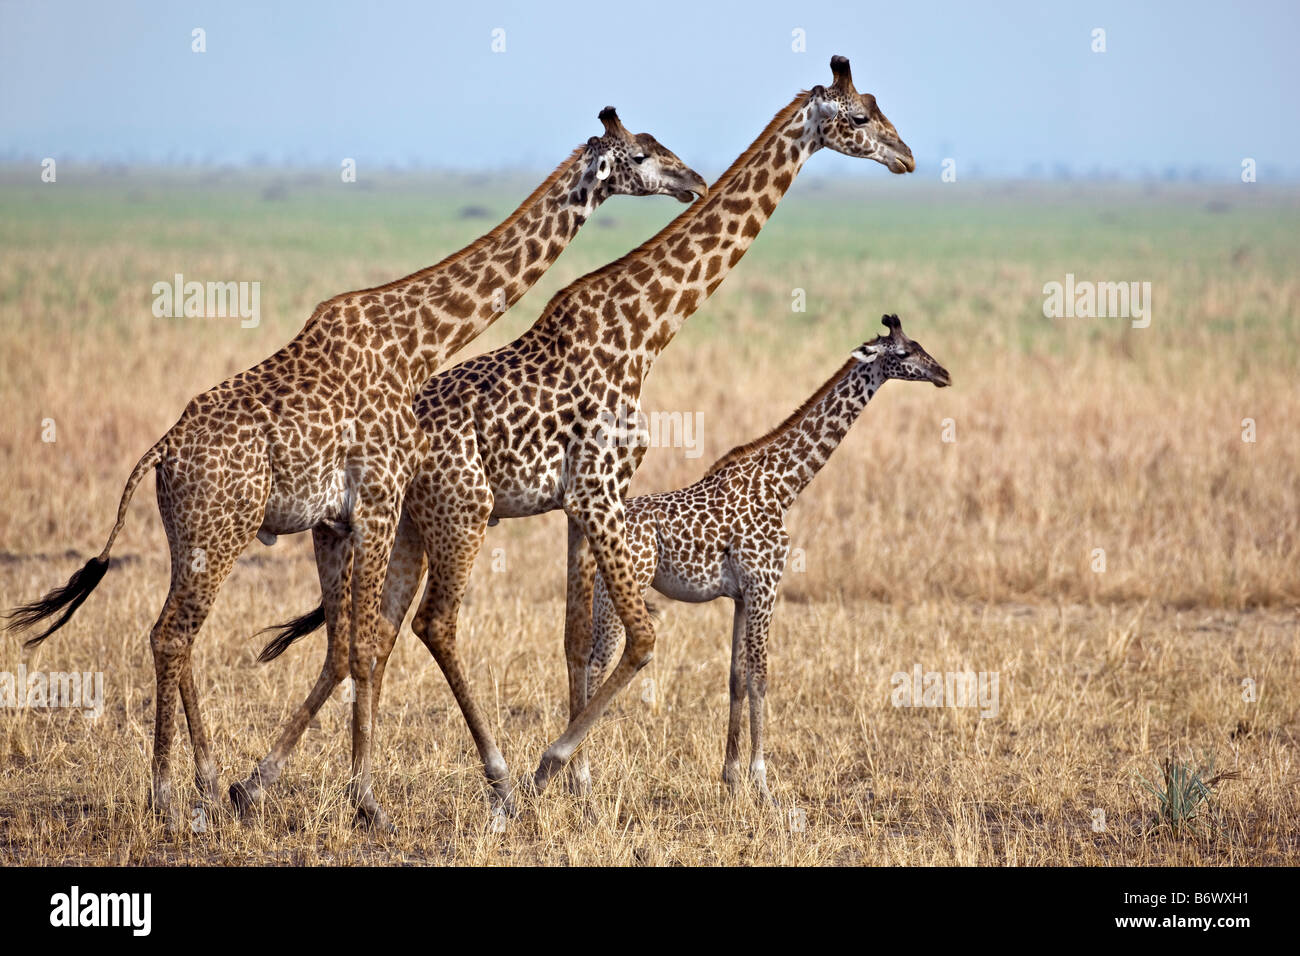 Tanzania, Katavi National Park. A Masai giraffe under large acacia trees. Stock Photo